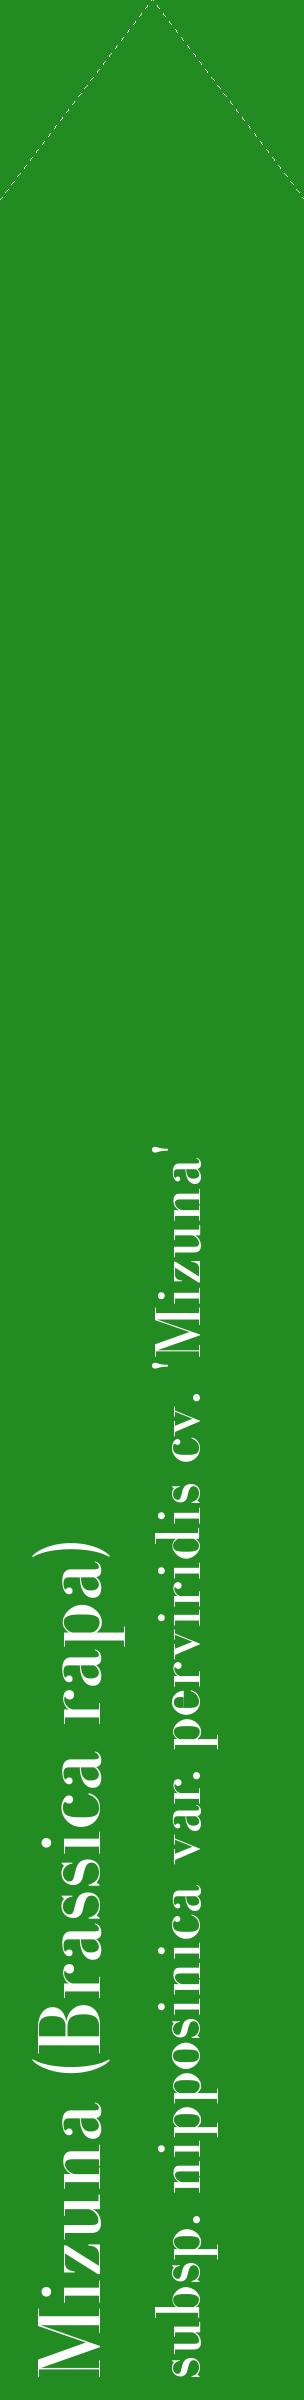 Étiquette de : Brassica rapa subsp. nipposinica var. perviridis cv. 'Mizuna' - format c - style blanche10_simplebod avec comestibilité